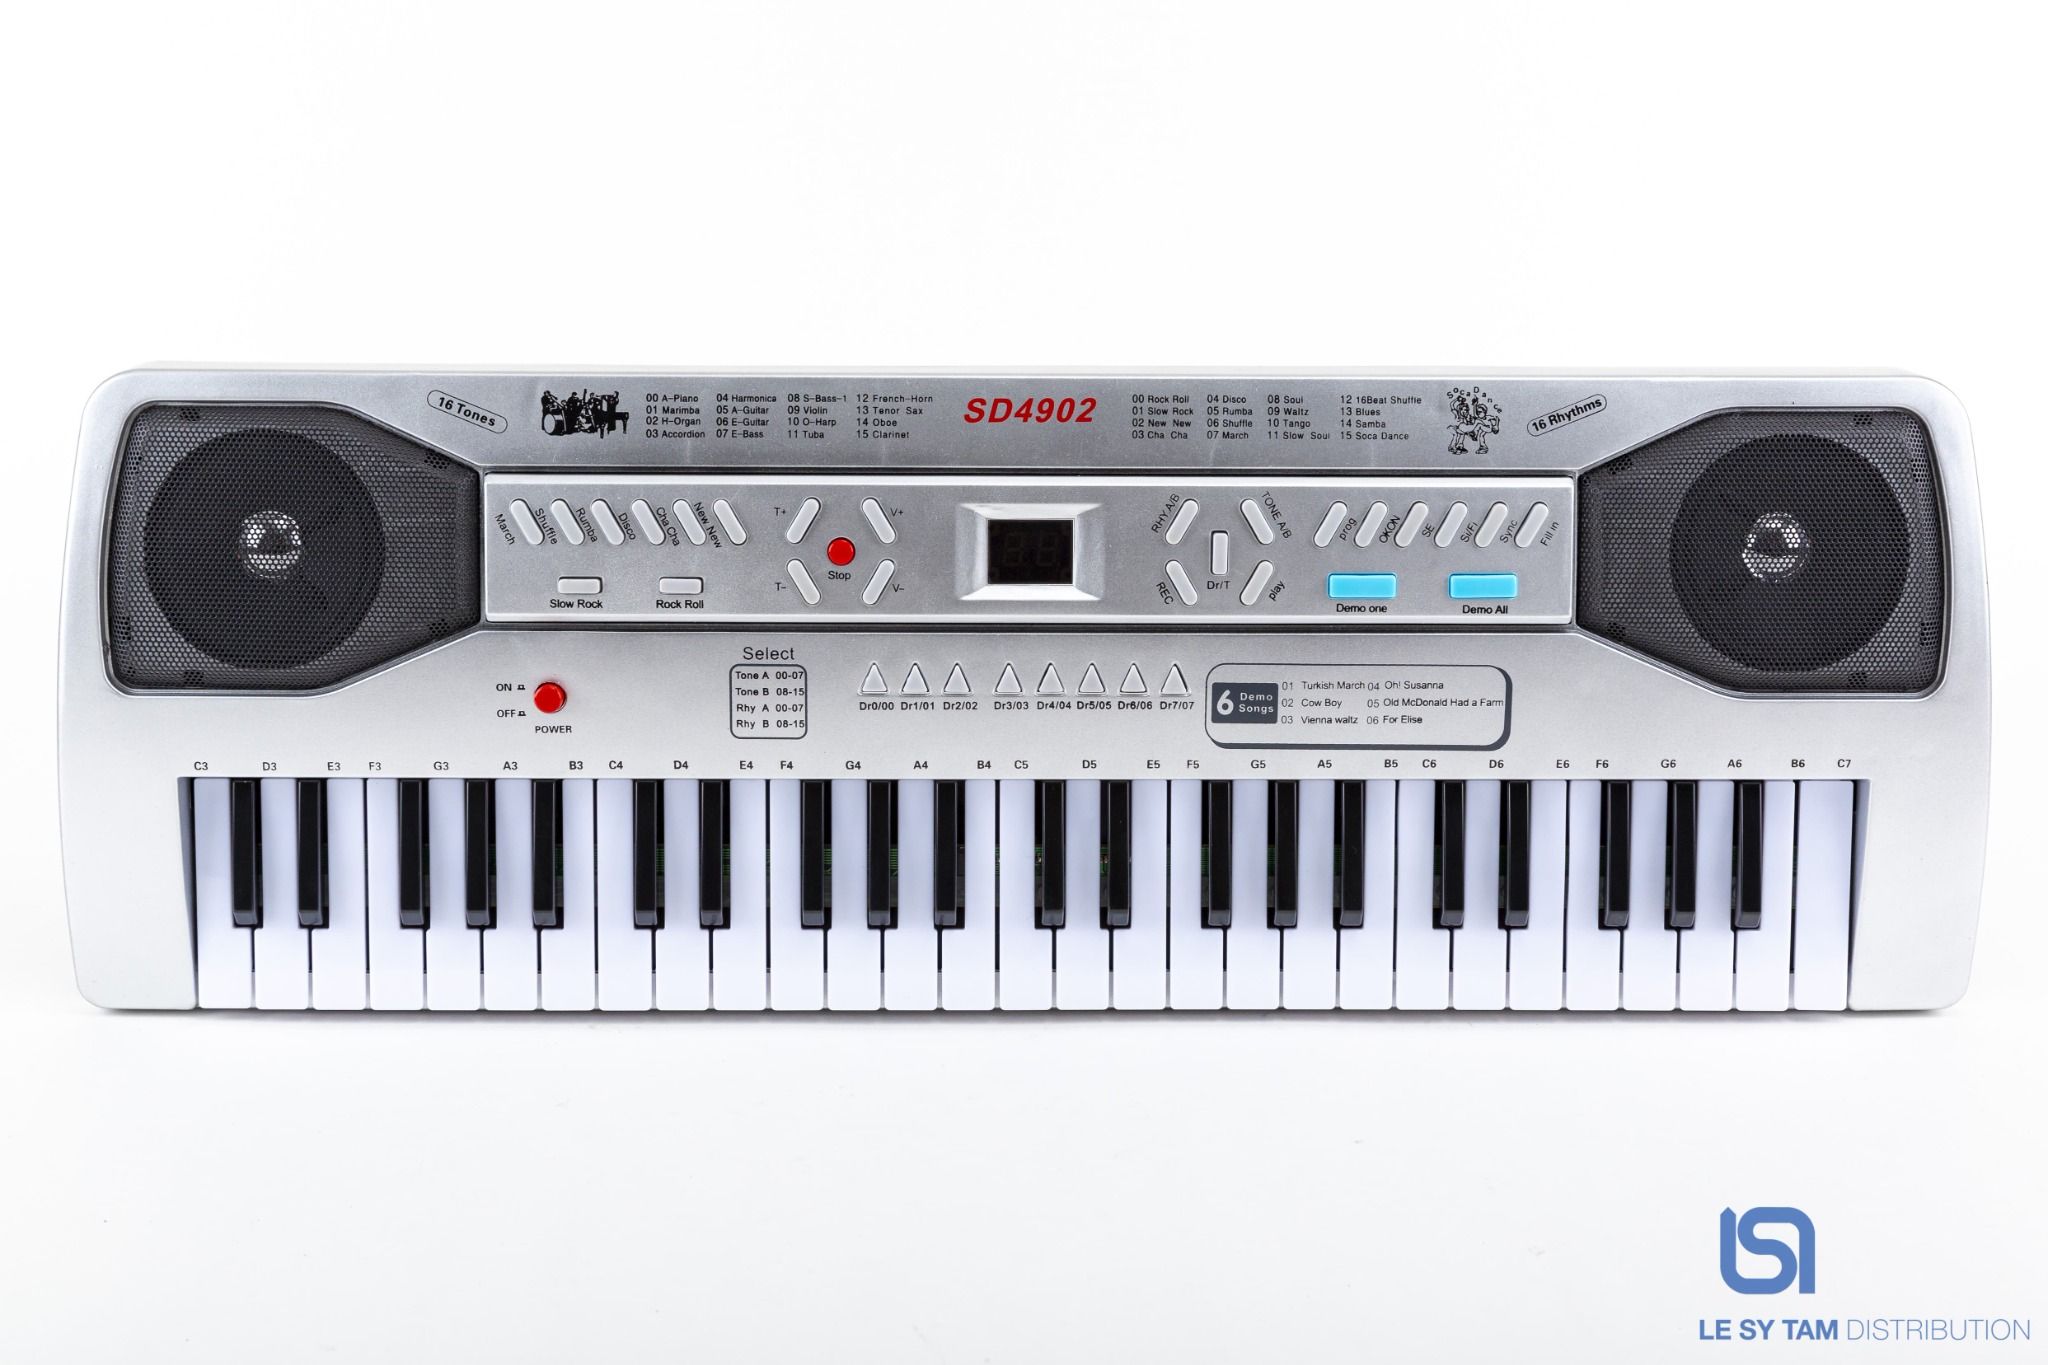  Đàn piano SD 4902 